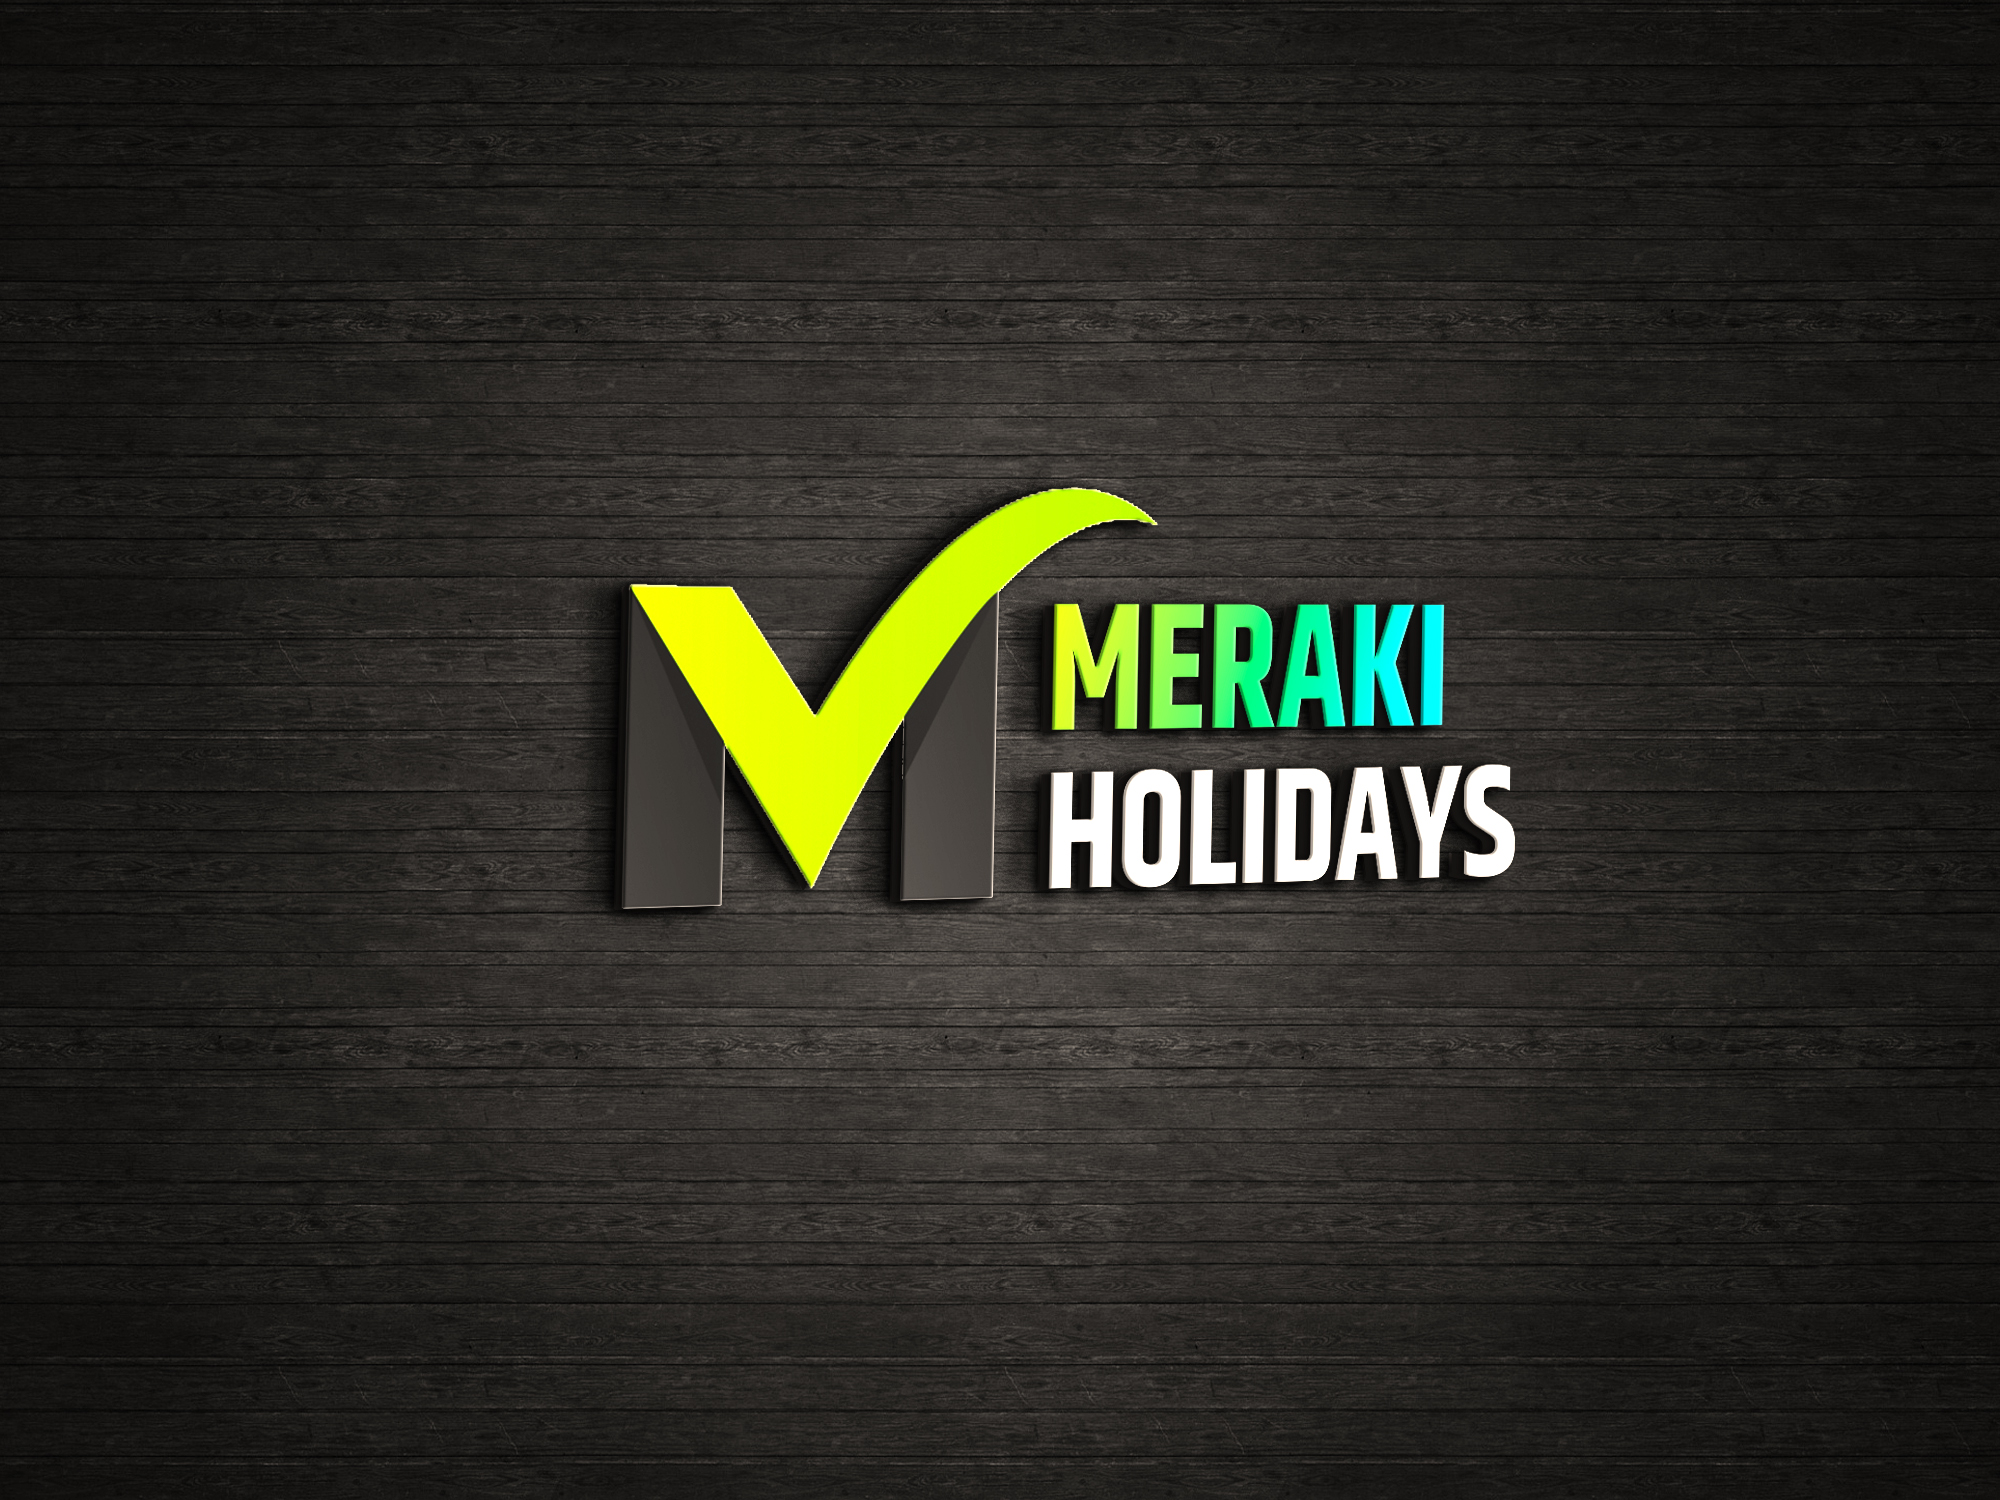 Meraki Events And Holidays Pvt Ltd